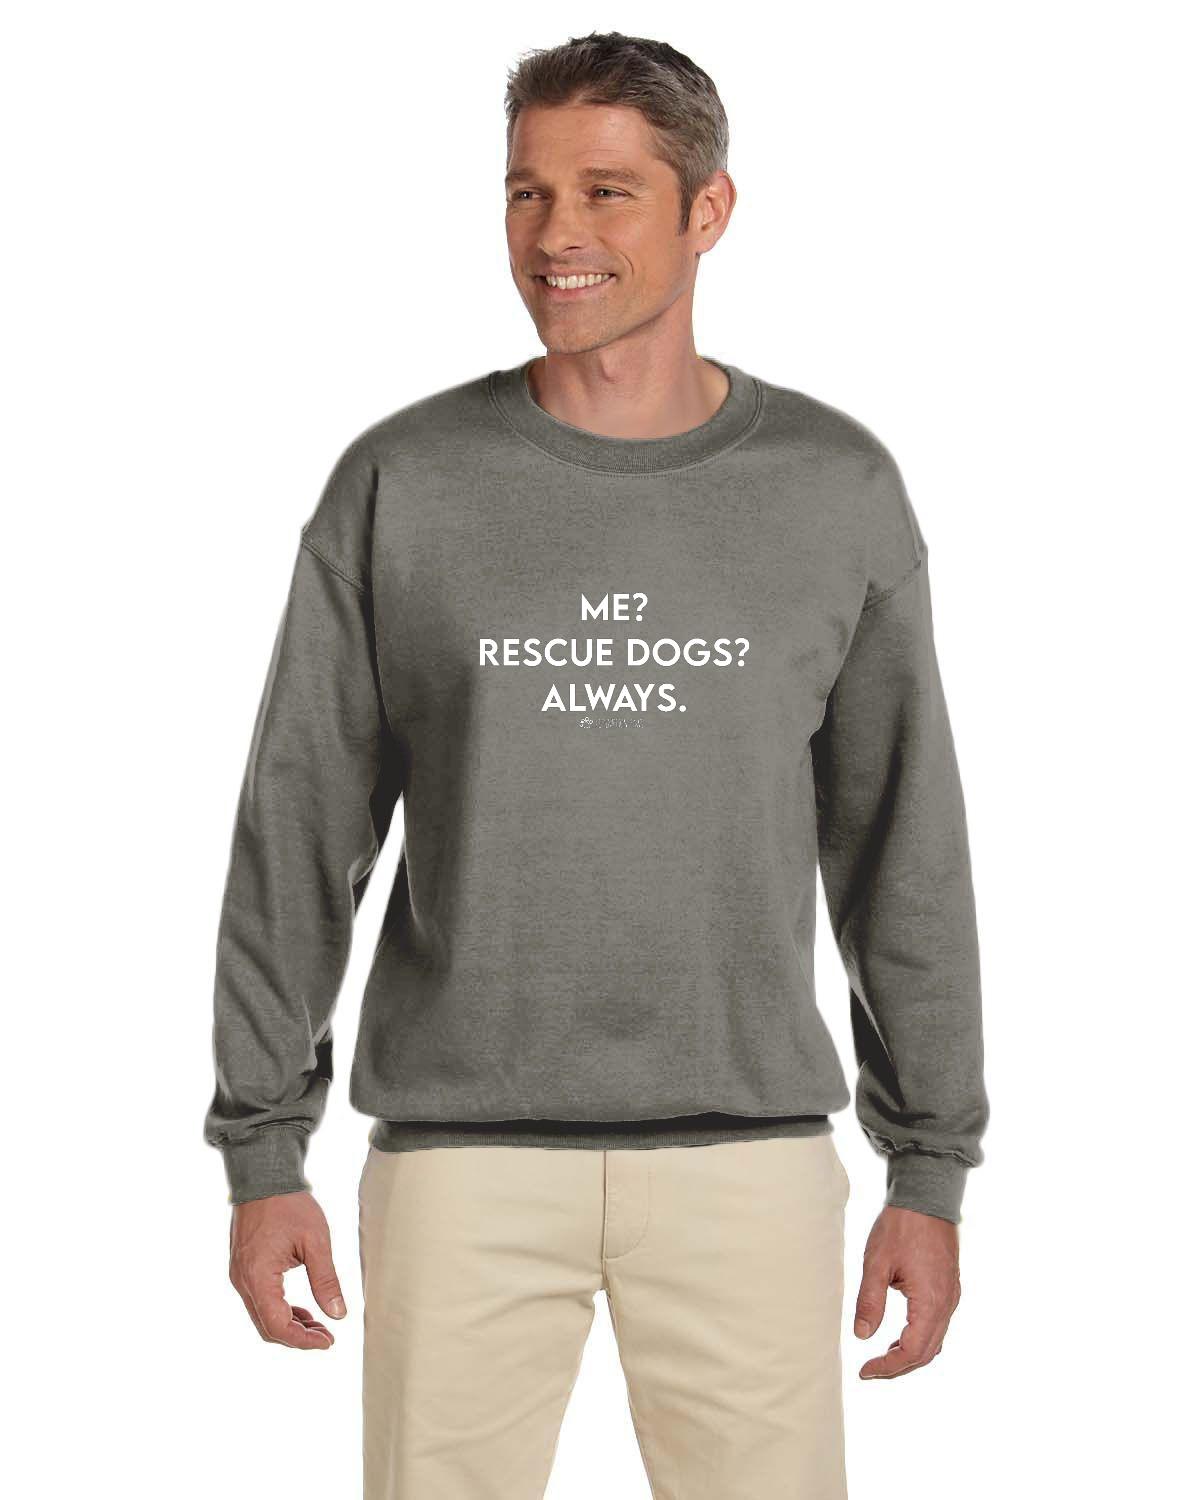 Me? Rescue Dogs? Always. Sweatshirt